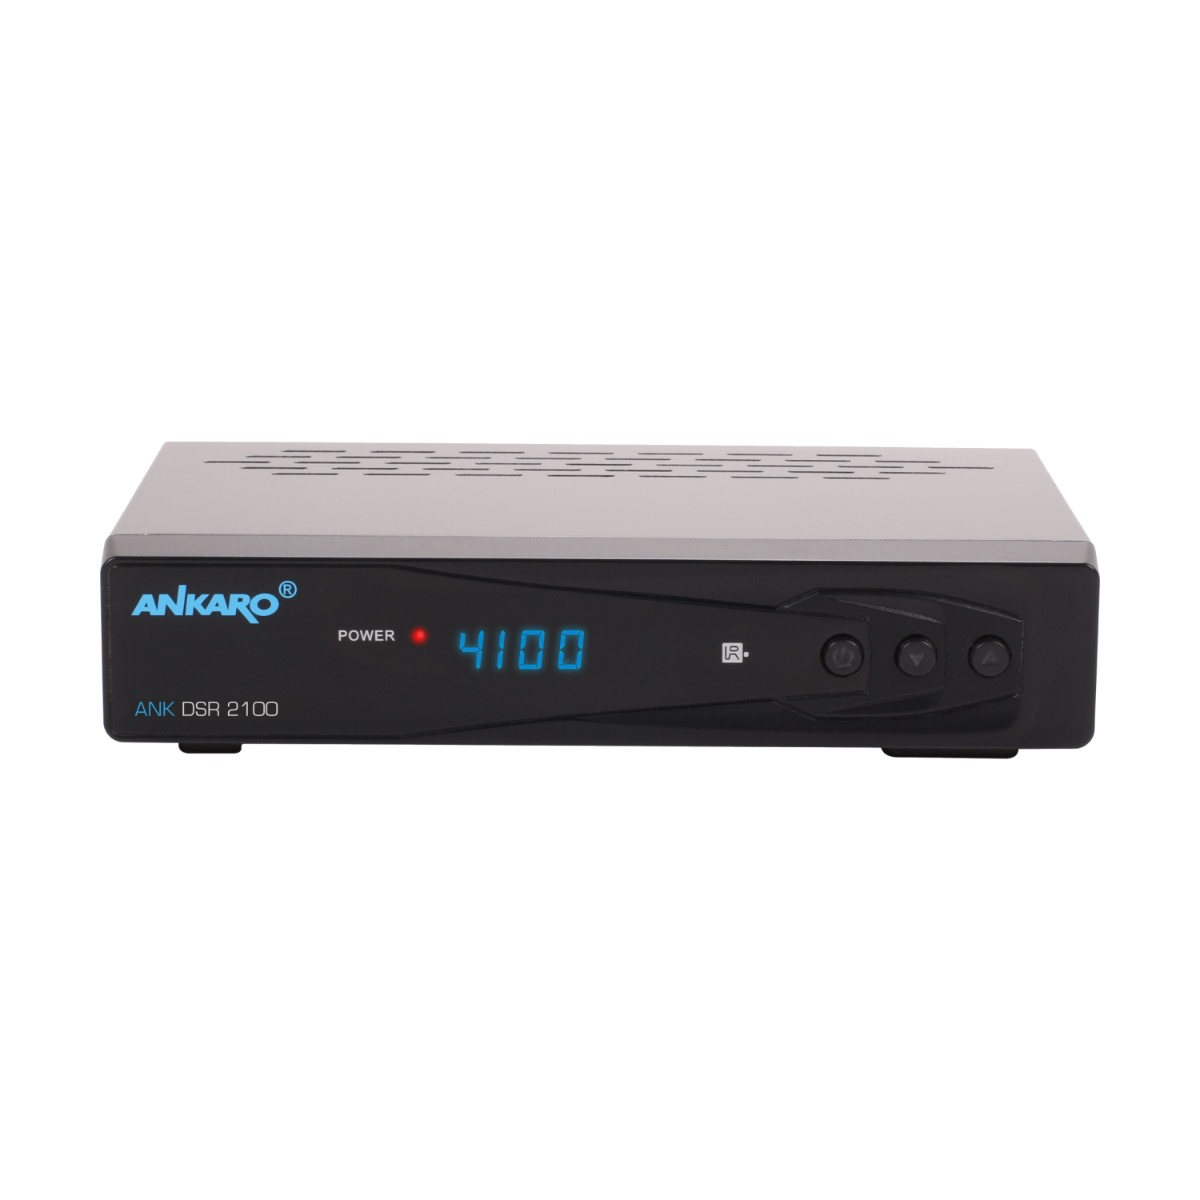 ANKARO (H.265), Sat Receiver, HD, Digitaler PVR, HDMI DSR DVB-T2 schwarz) Receiver 1080p (HDTV, Full DVB-S, DVB-C2, DVB-S2, 2100 PVR-Funktion, Satelliten mit DVB-S2, ANK